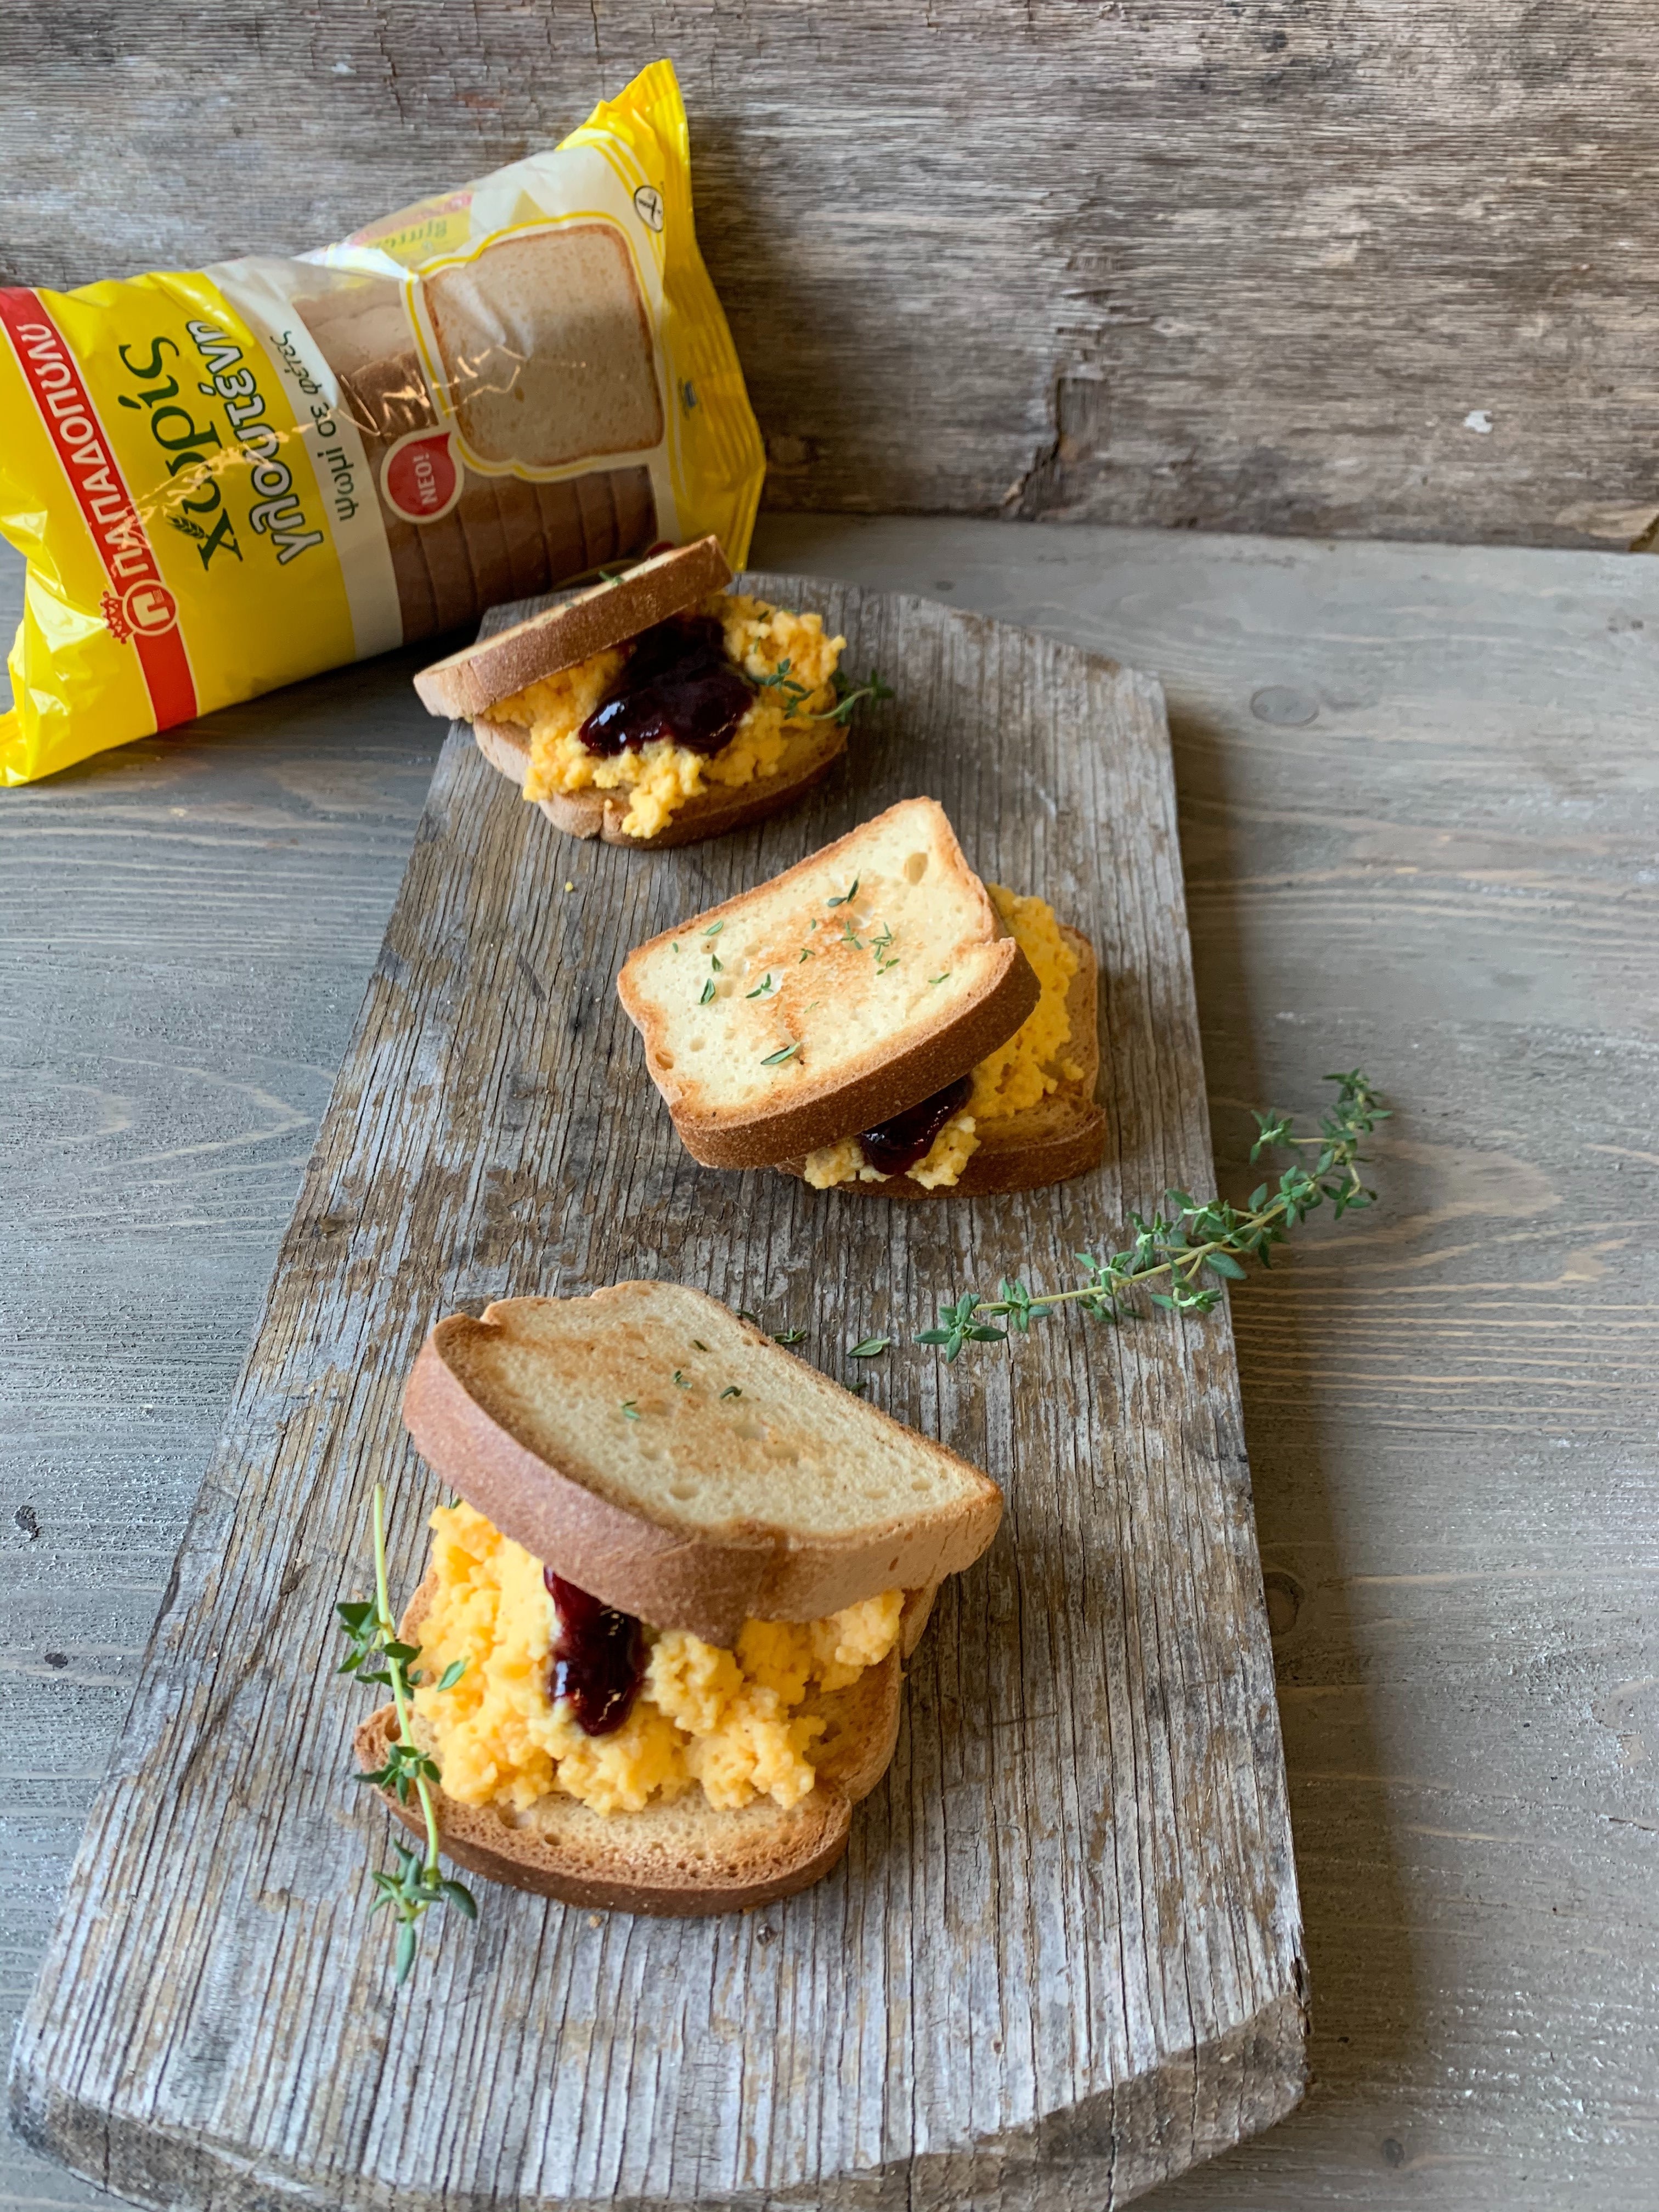 image for Scrambled eggs σάντουιτς με ψωμί σε φέτες Χωρίς Γλουτένη Παπαδοπούλου